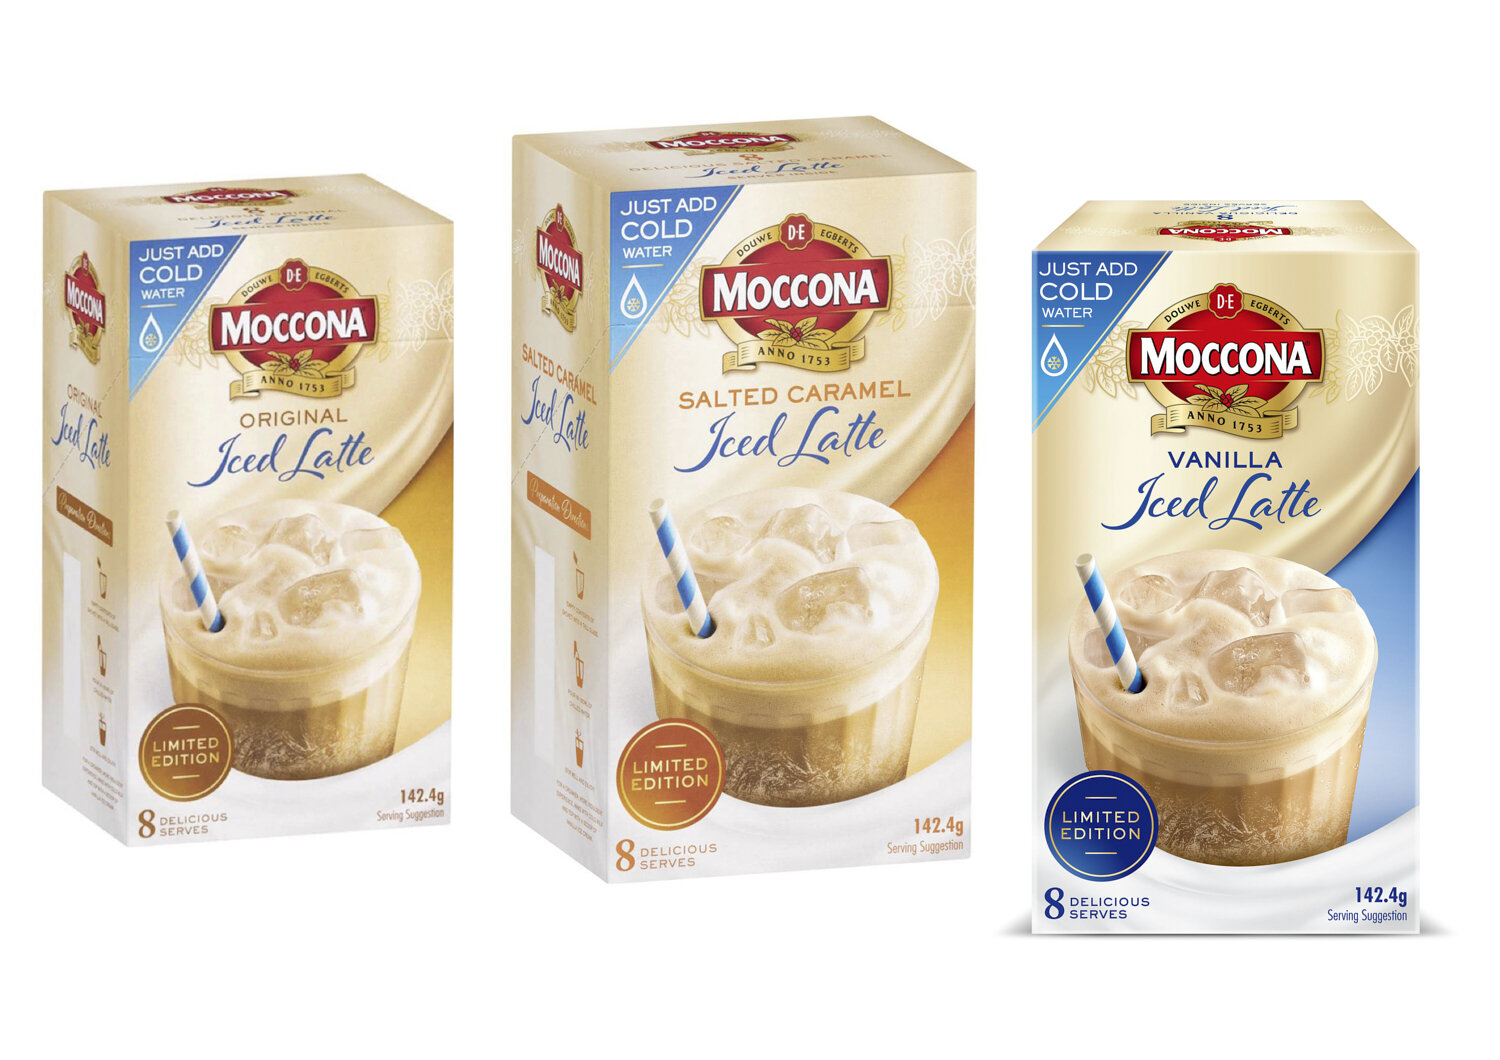 Maccona iced latte pack images